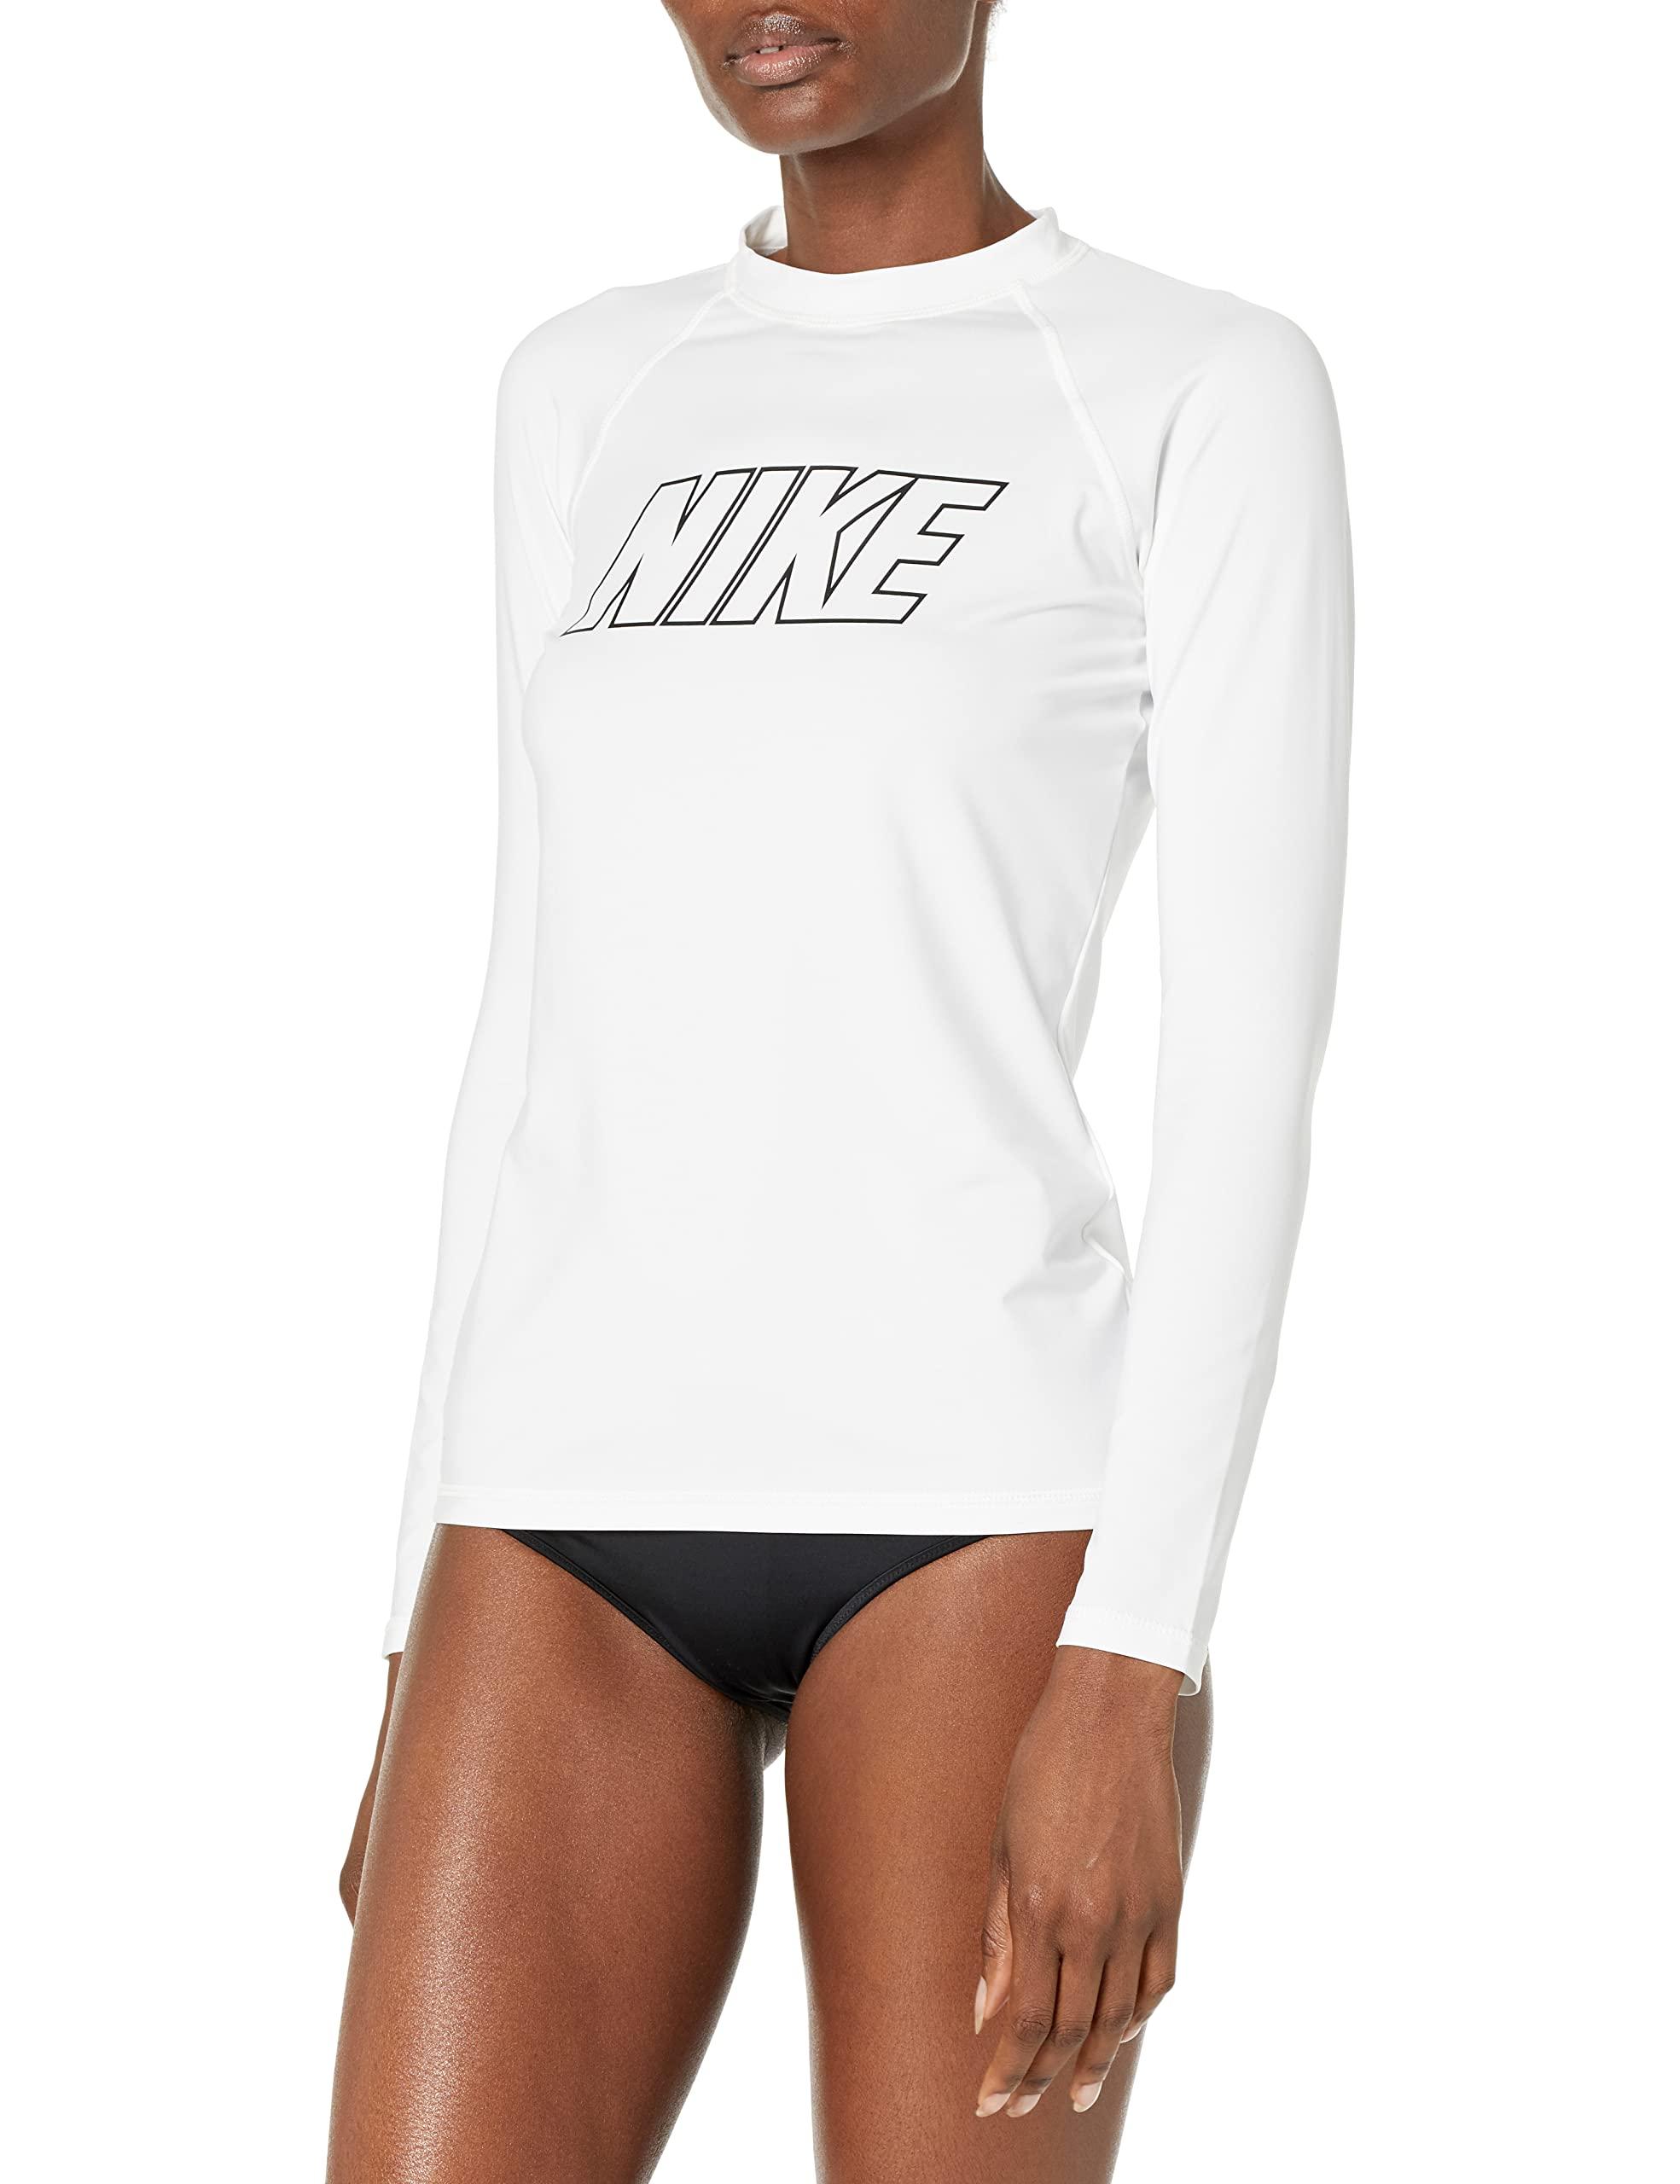 Nike Swim Standard Upf 40+ Short Sleeve Rashguard Swim Tee in White | Lyst